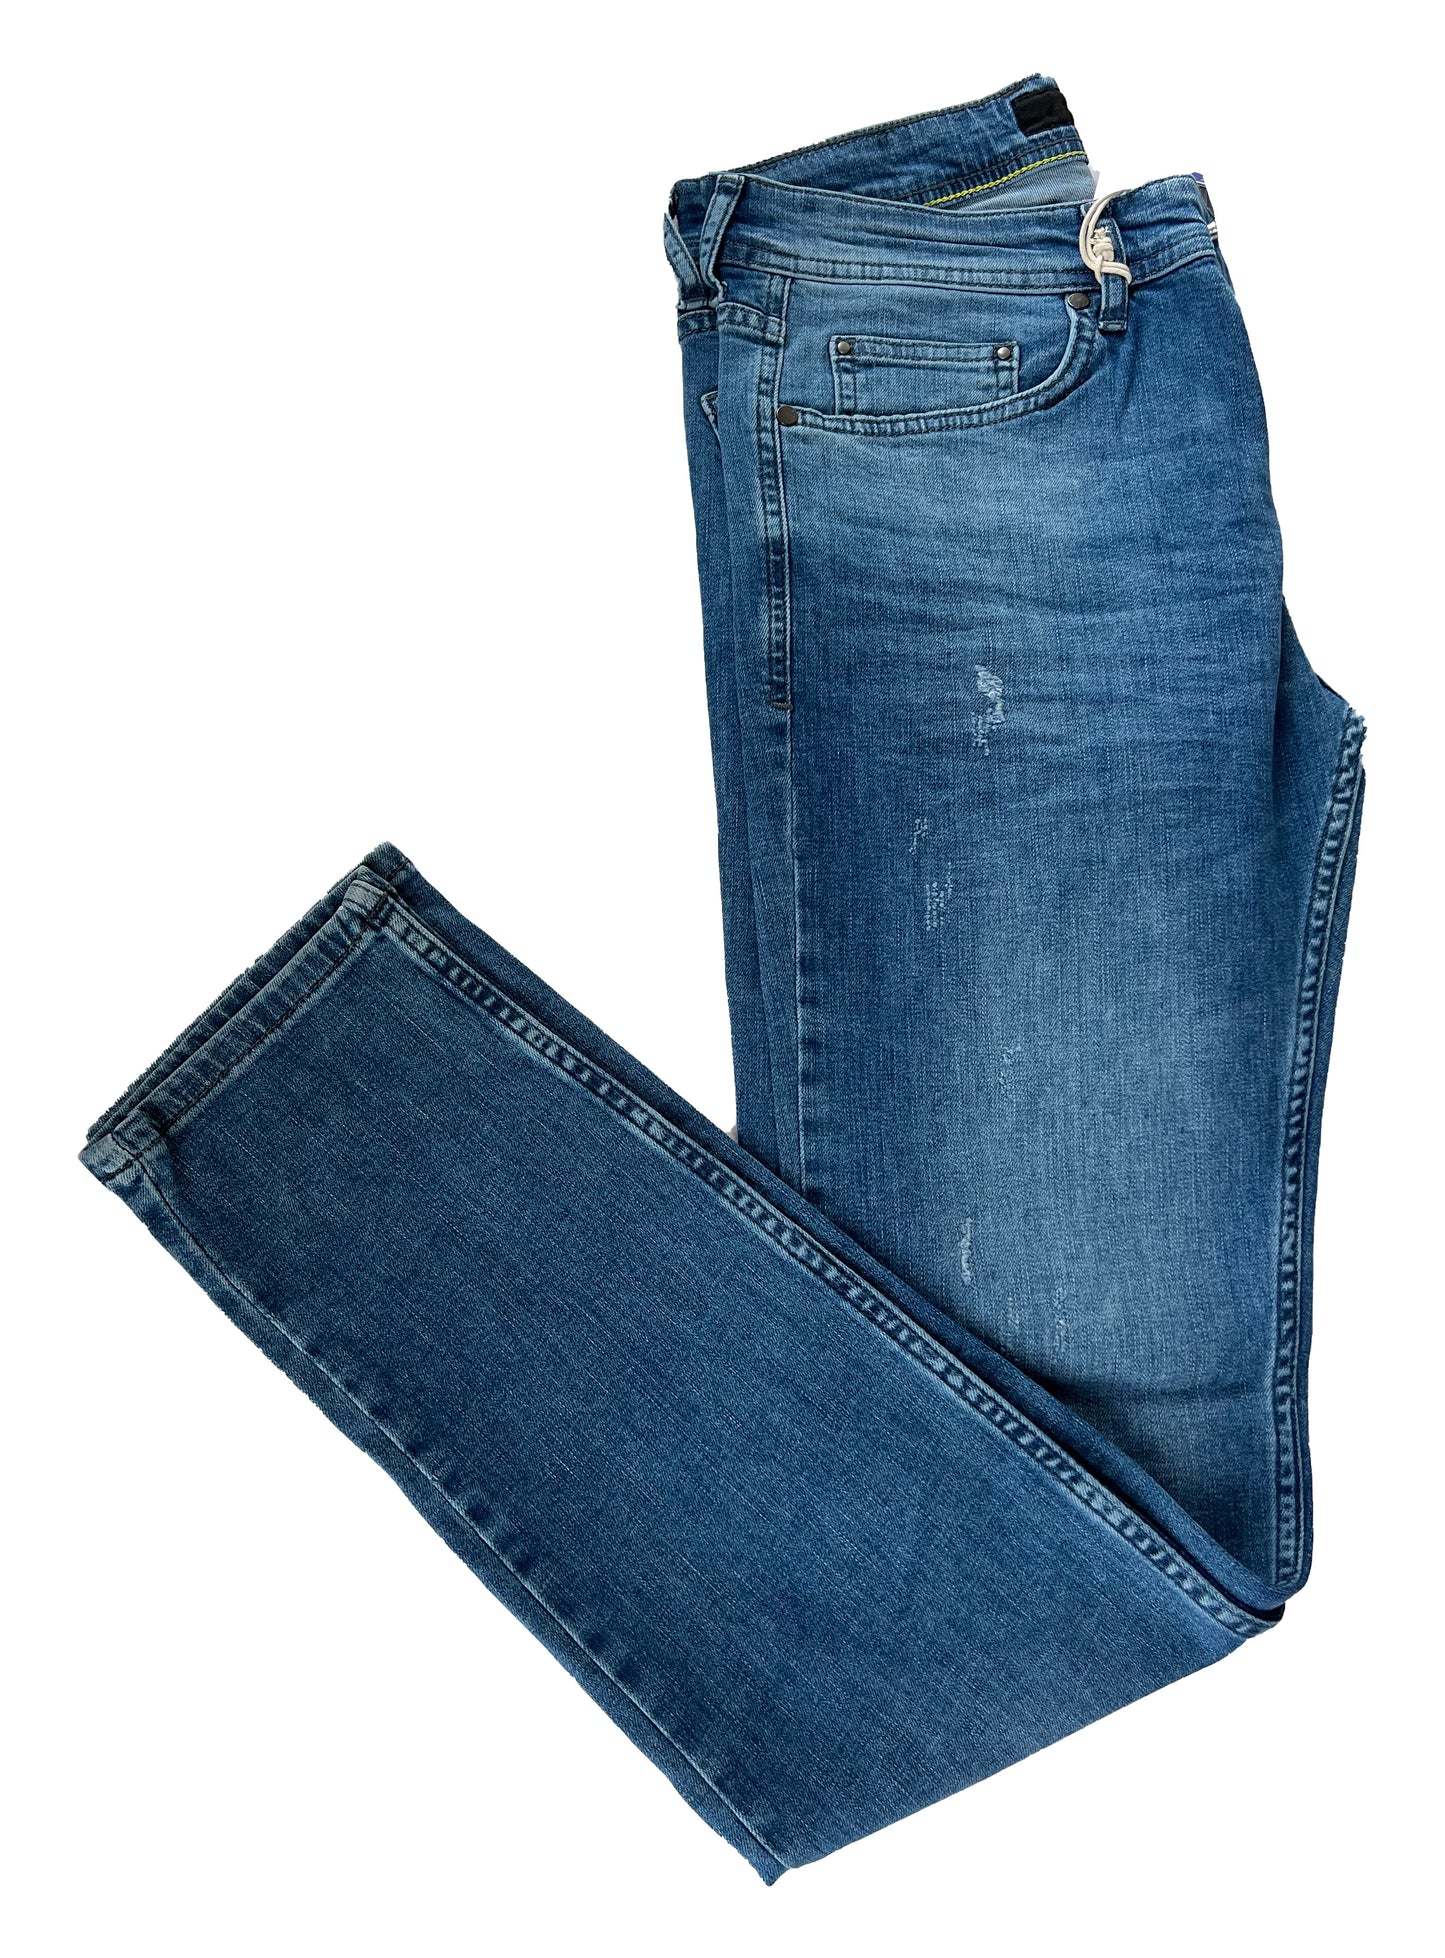 Men's Slim Fit Comfortable Jeans, Trousers- Tenby